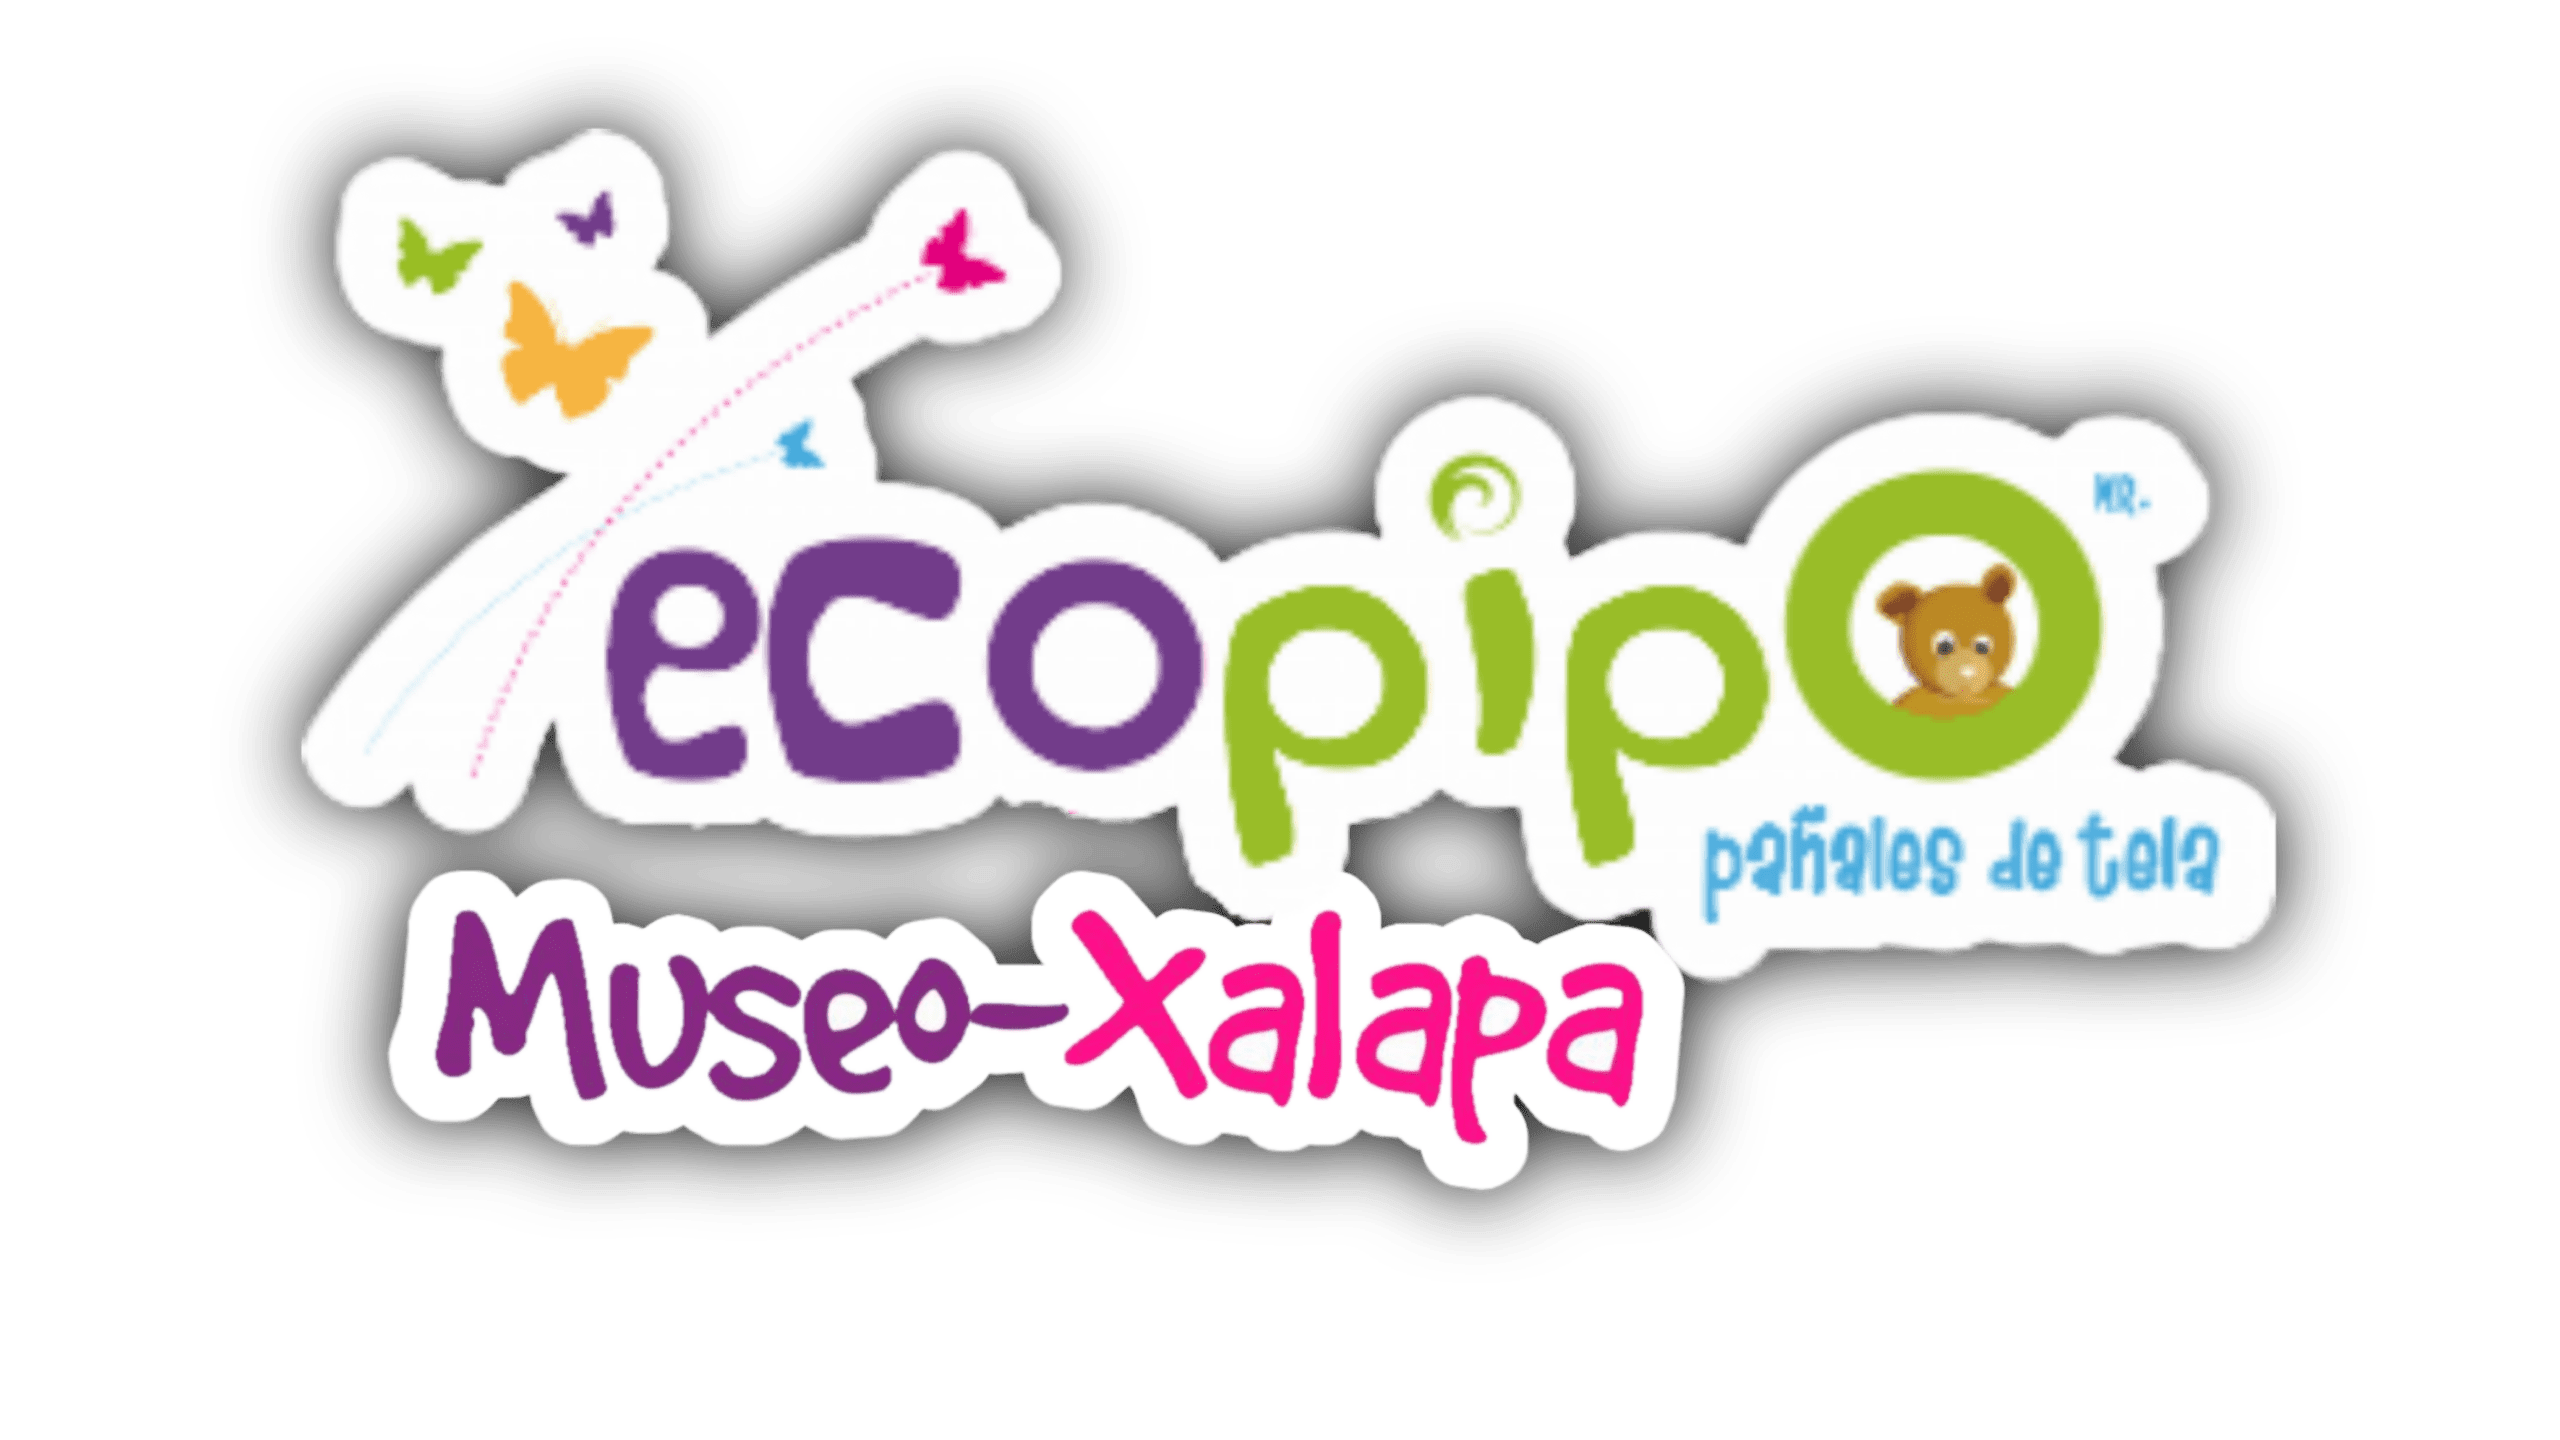 Ecopipo Museo Xalapa